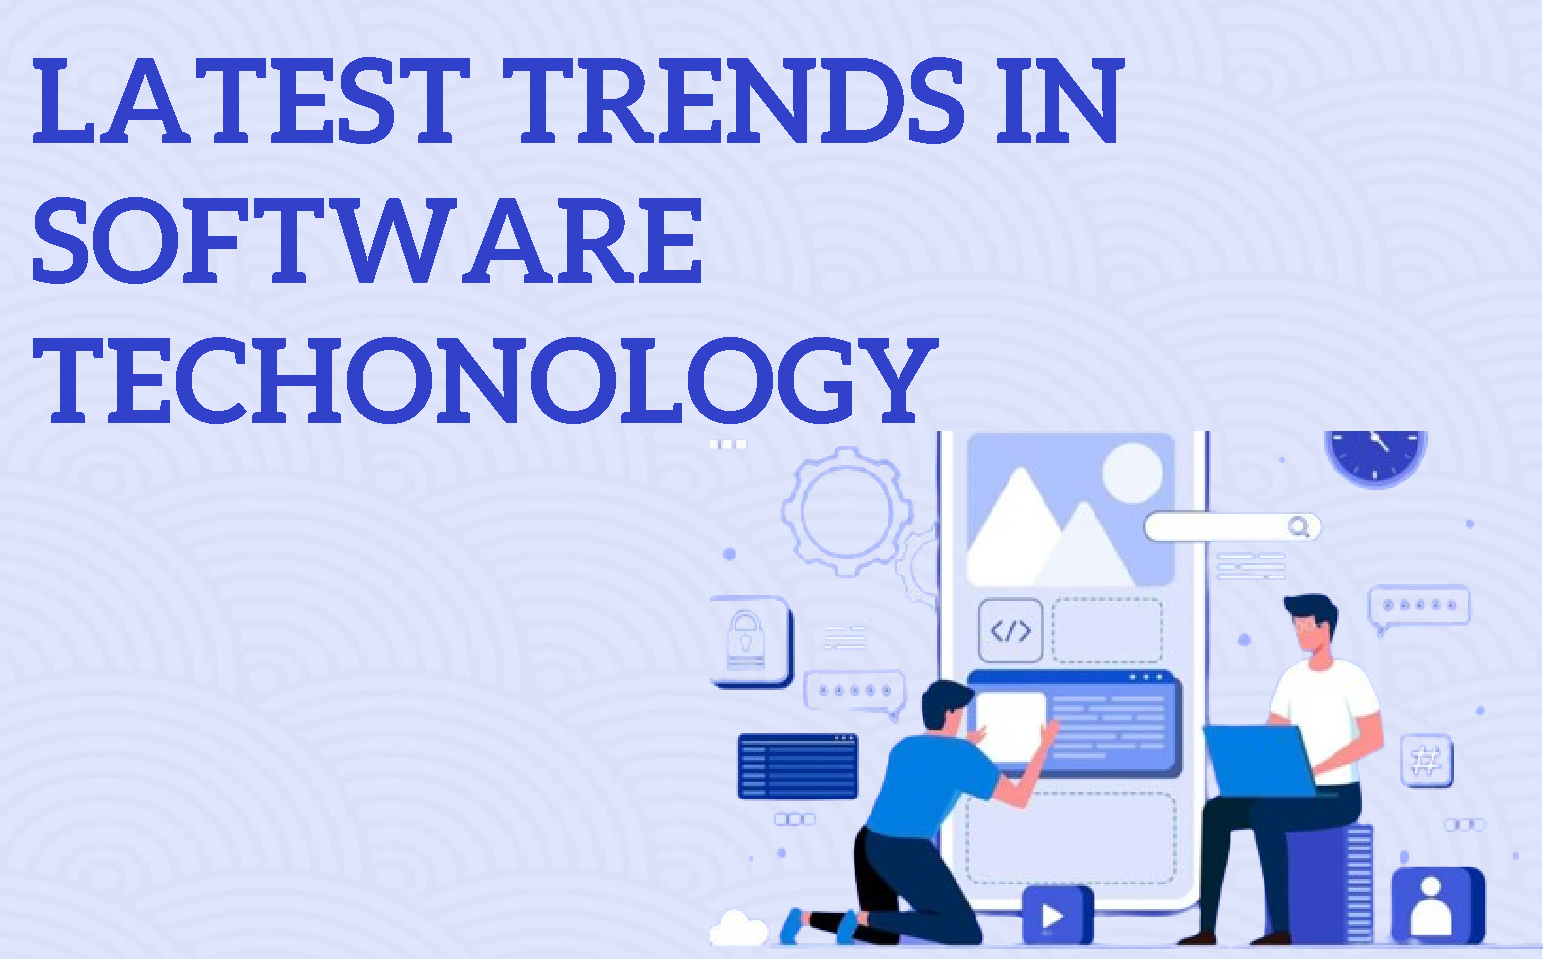 Software Technology trends